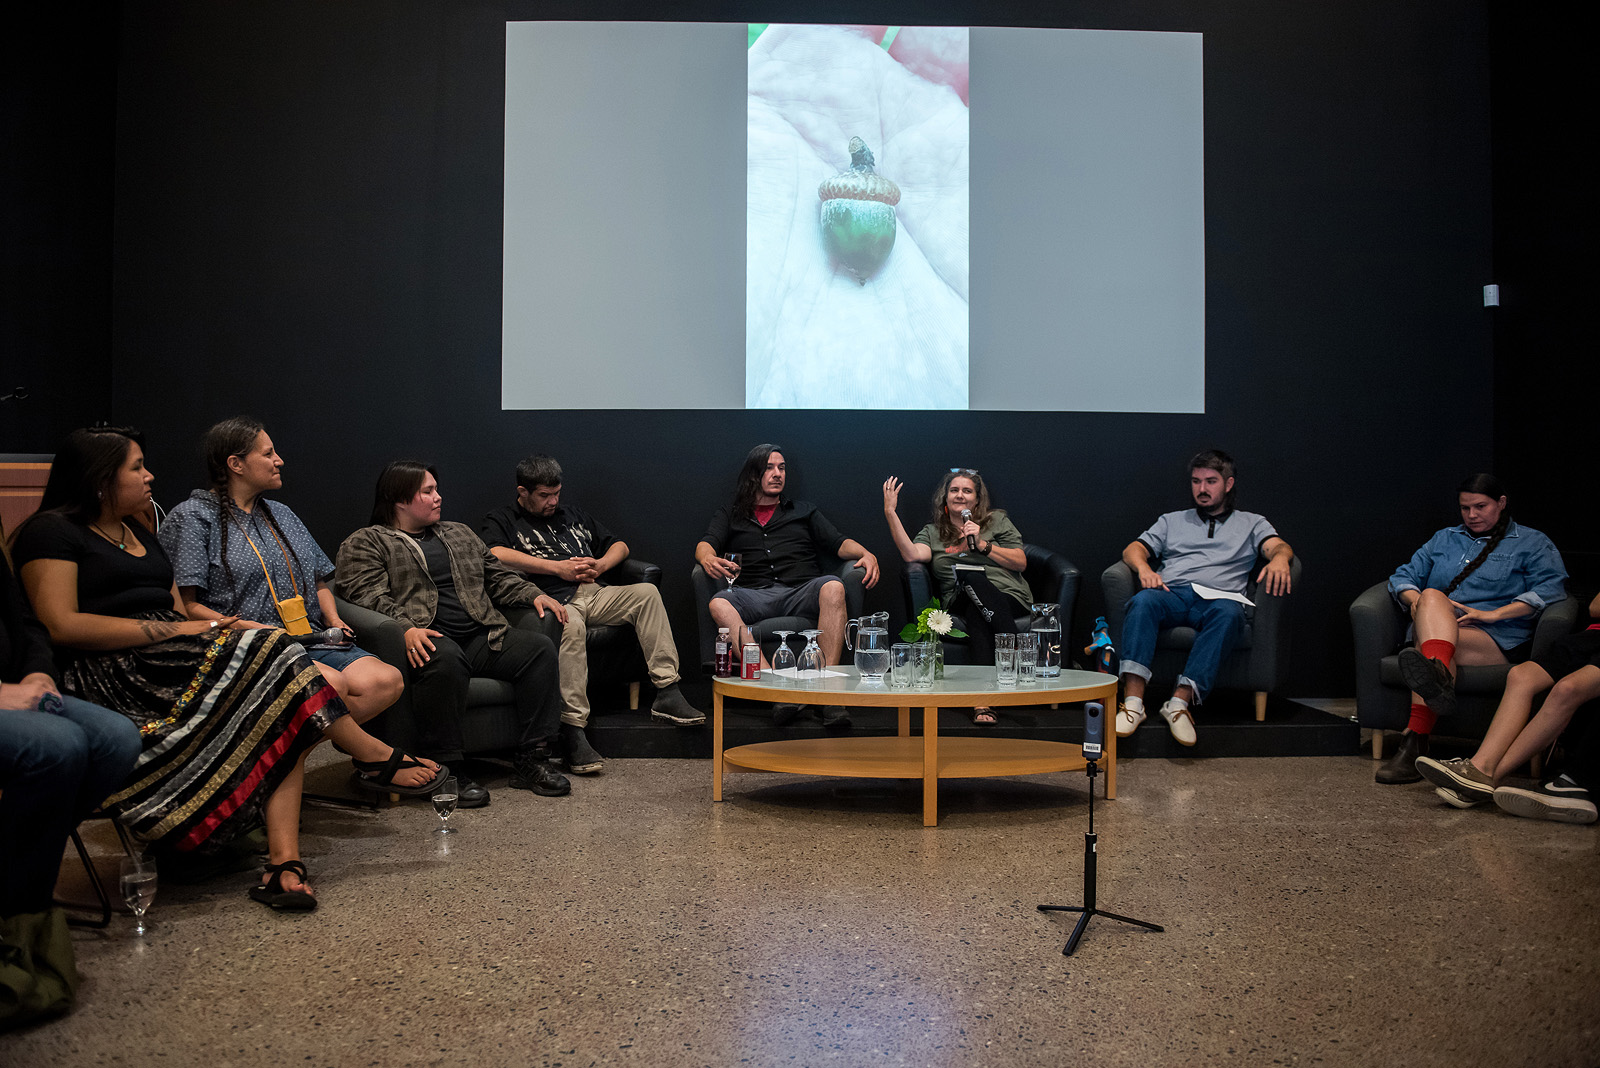 Indigenous Land-based Digital Worlding AR Artist Panel Discussion.